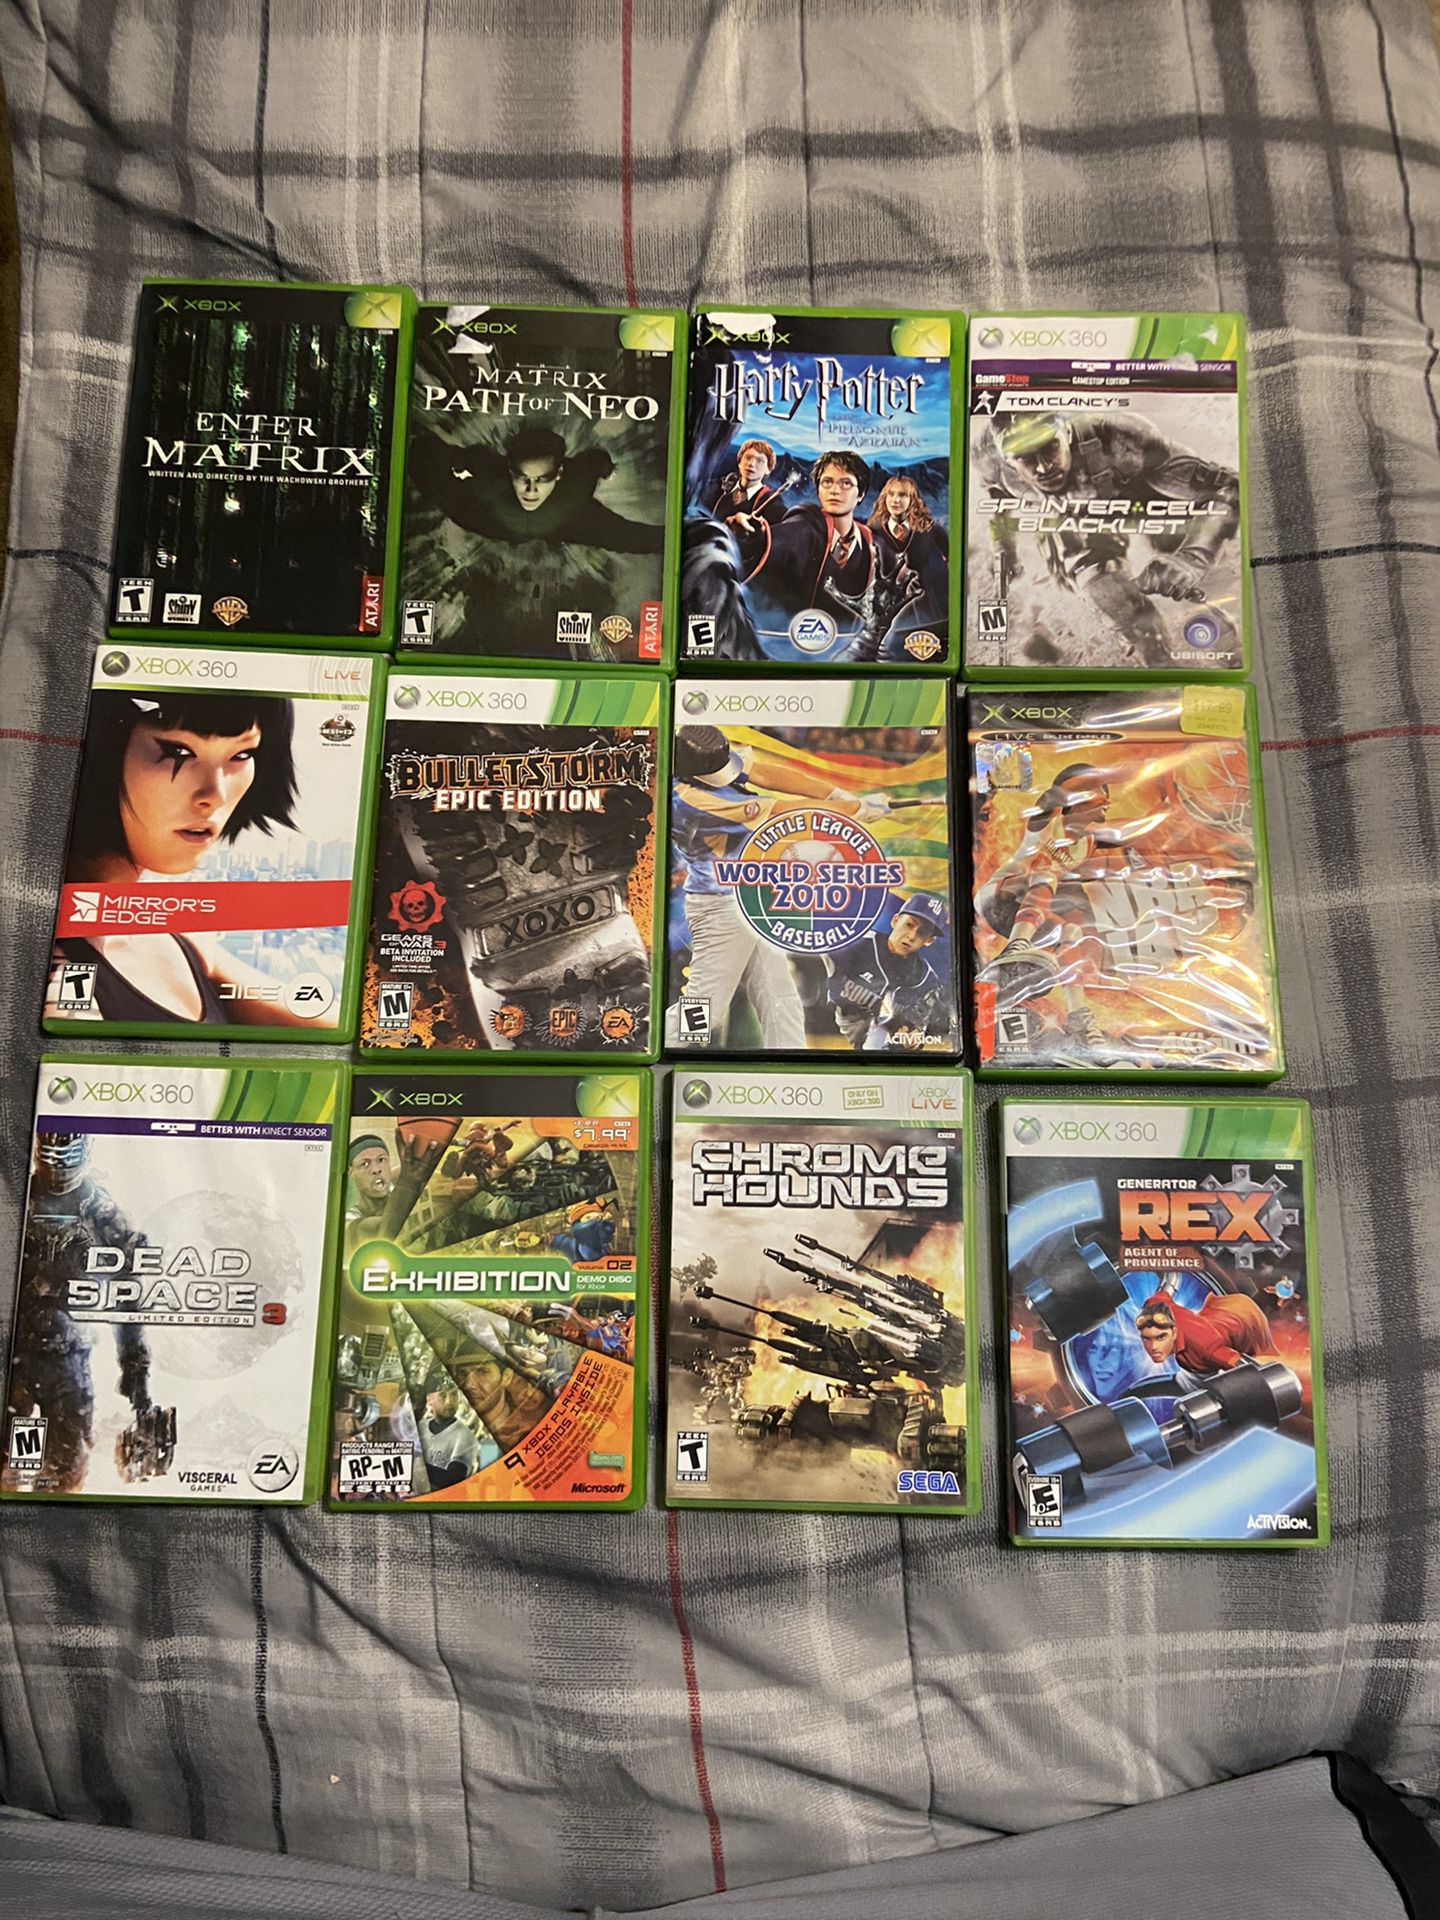 Original Xbox and Xbox 360 games